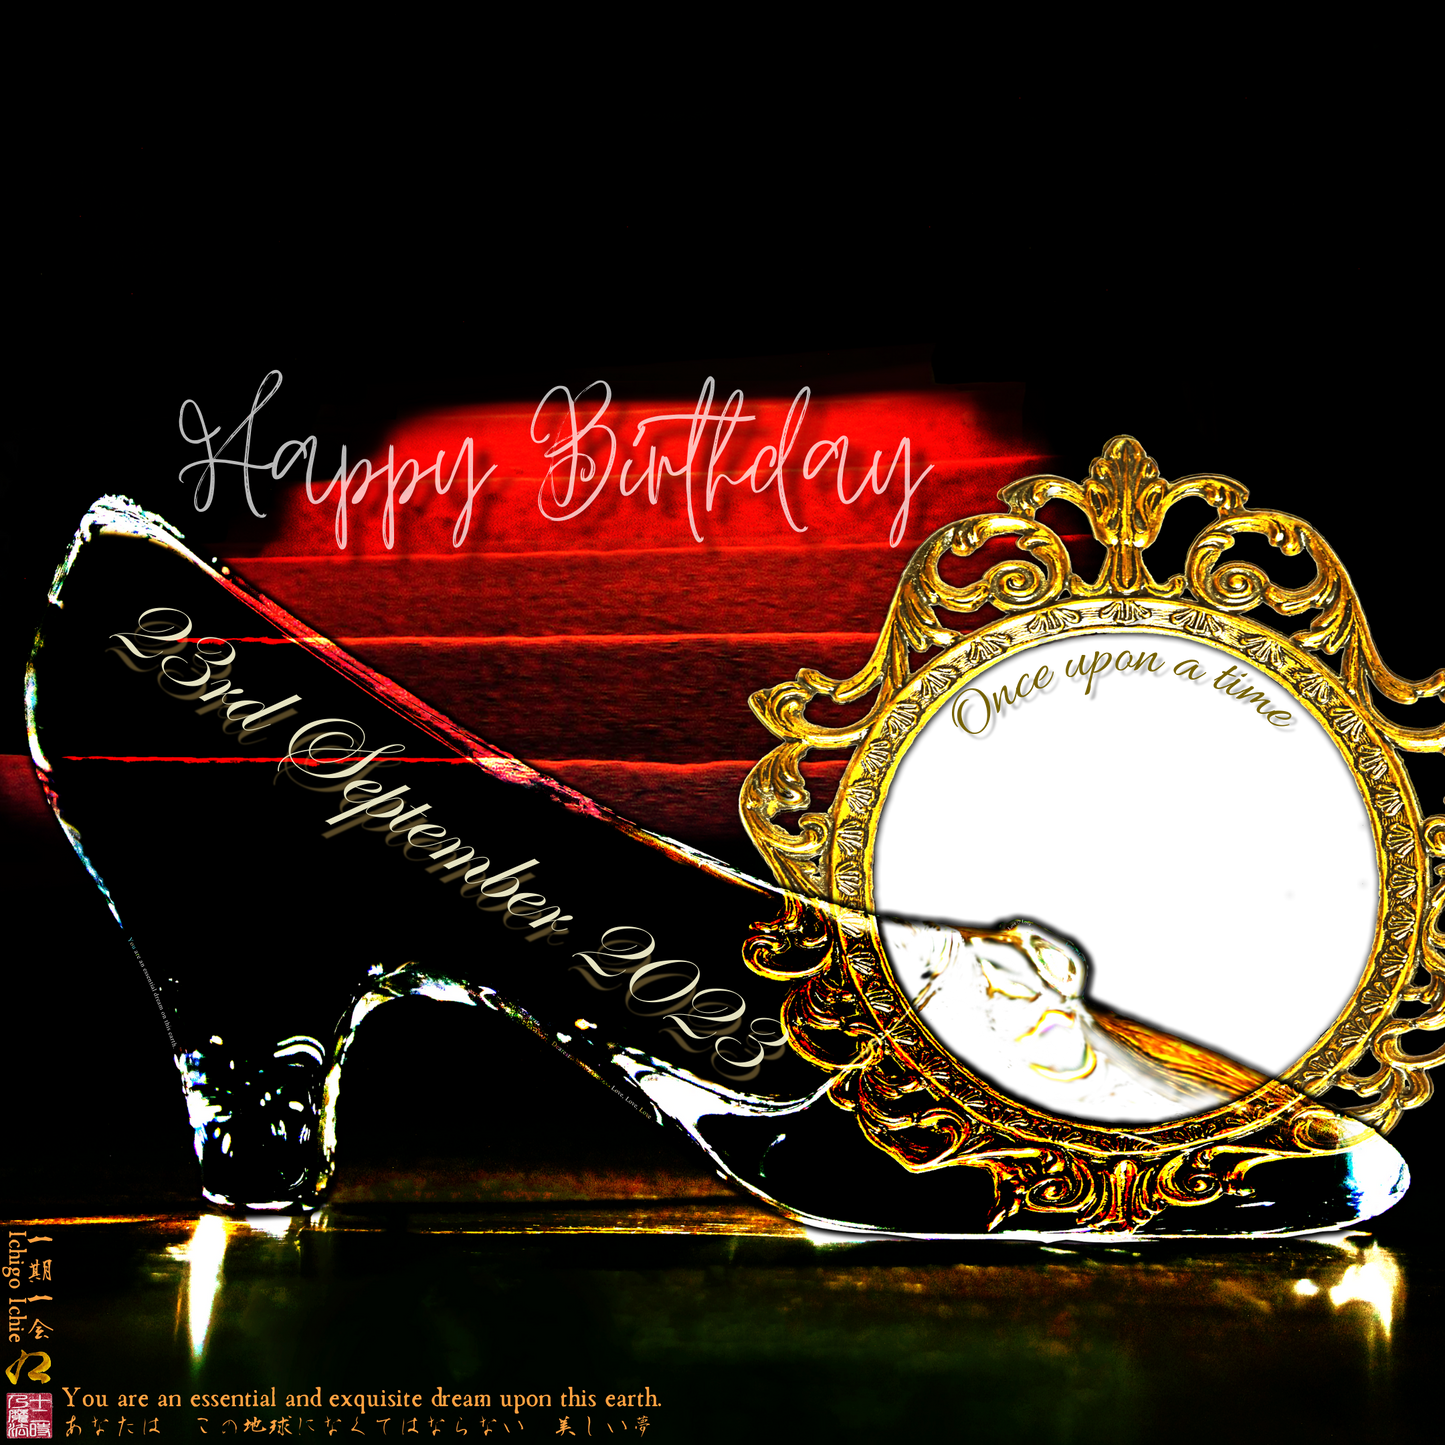 Happy Birthday Glass Slipper "Ichigo Ichie" 23rd September 2023 the Right (1-of-1) NFT Art